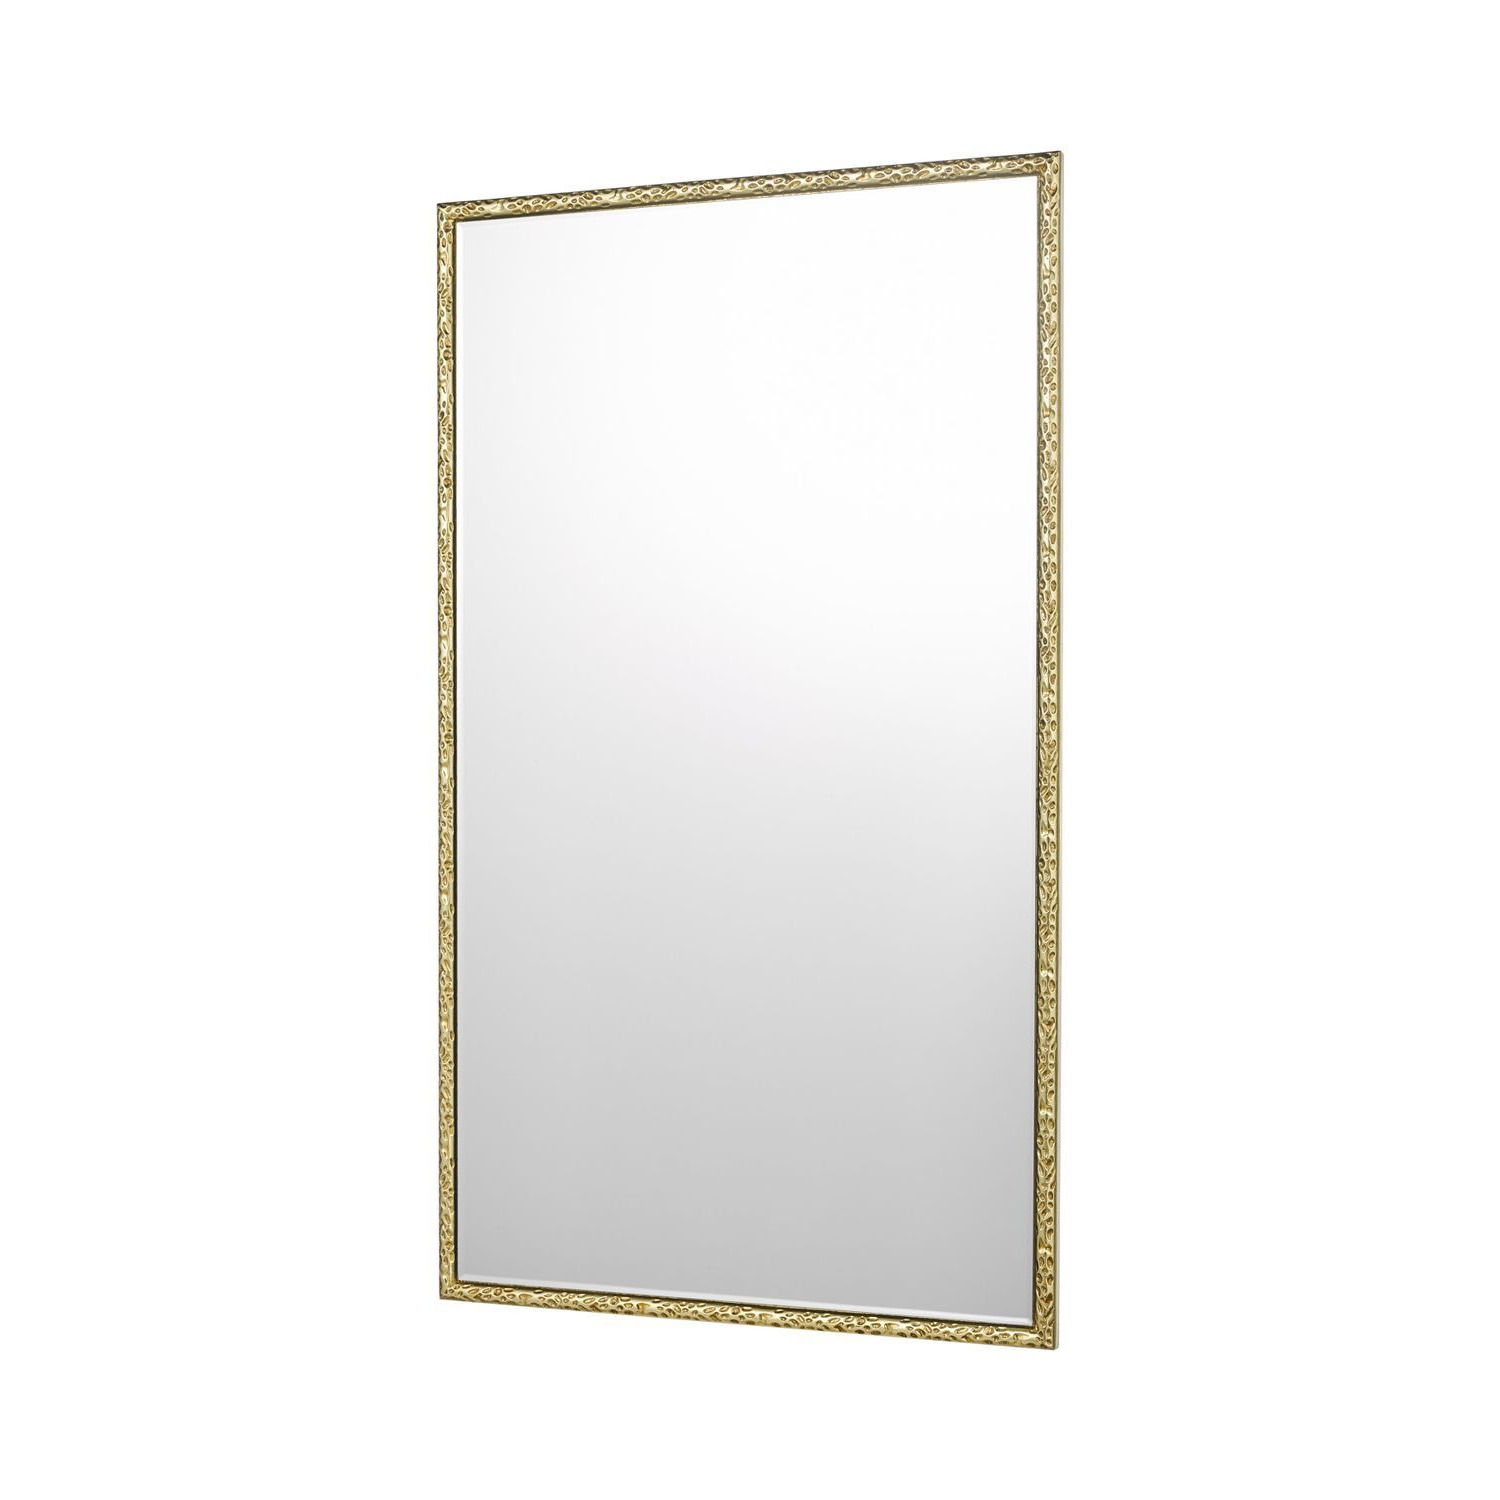 Där Jinelle Hammered Texture Rectangular Wall Mirror, 86 x 50cm, Gold - image 1